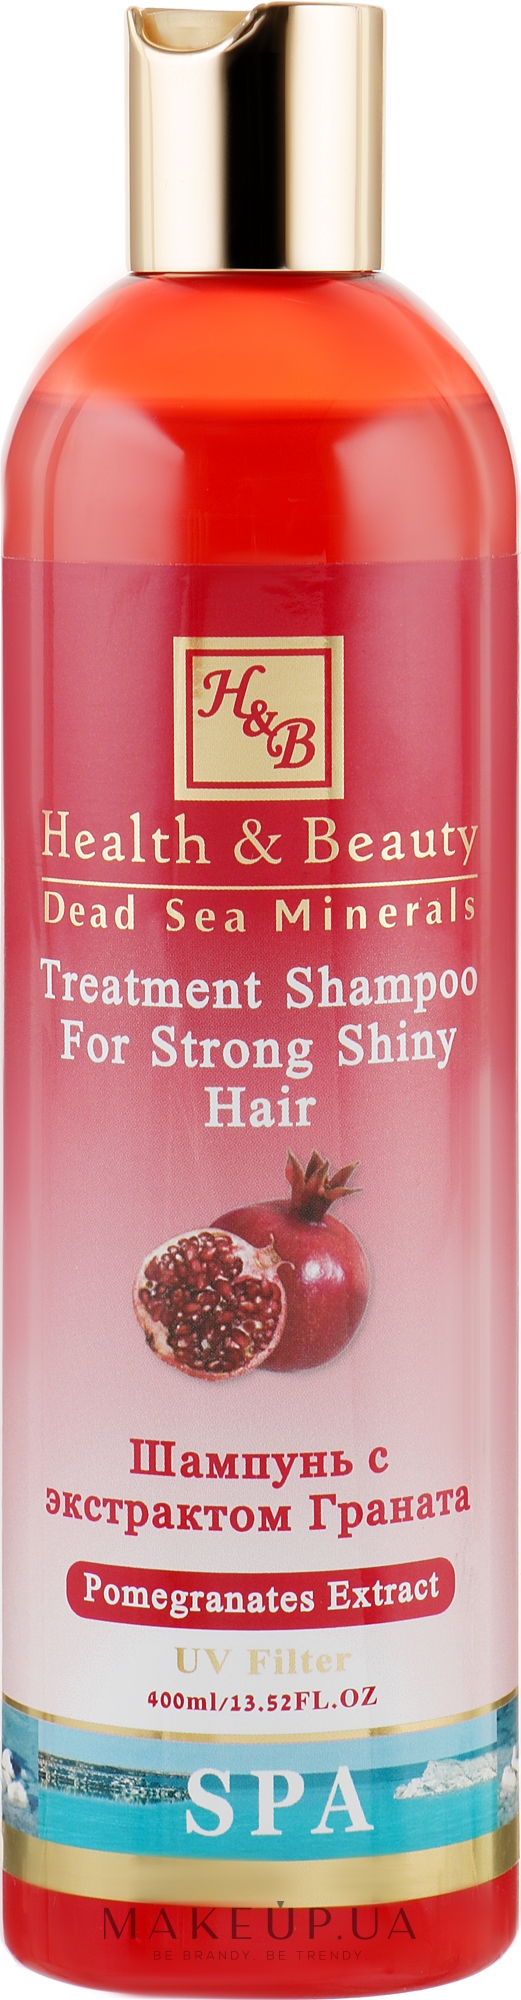 Зміцнюючий шампунь для здоров'я і блиску волосся з екстрактом граната - Health And Beauty Pomegranates Extract Shampoo for Strong Shiny Hair — фото 400ml